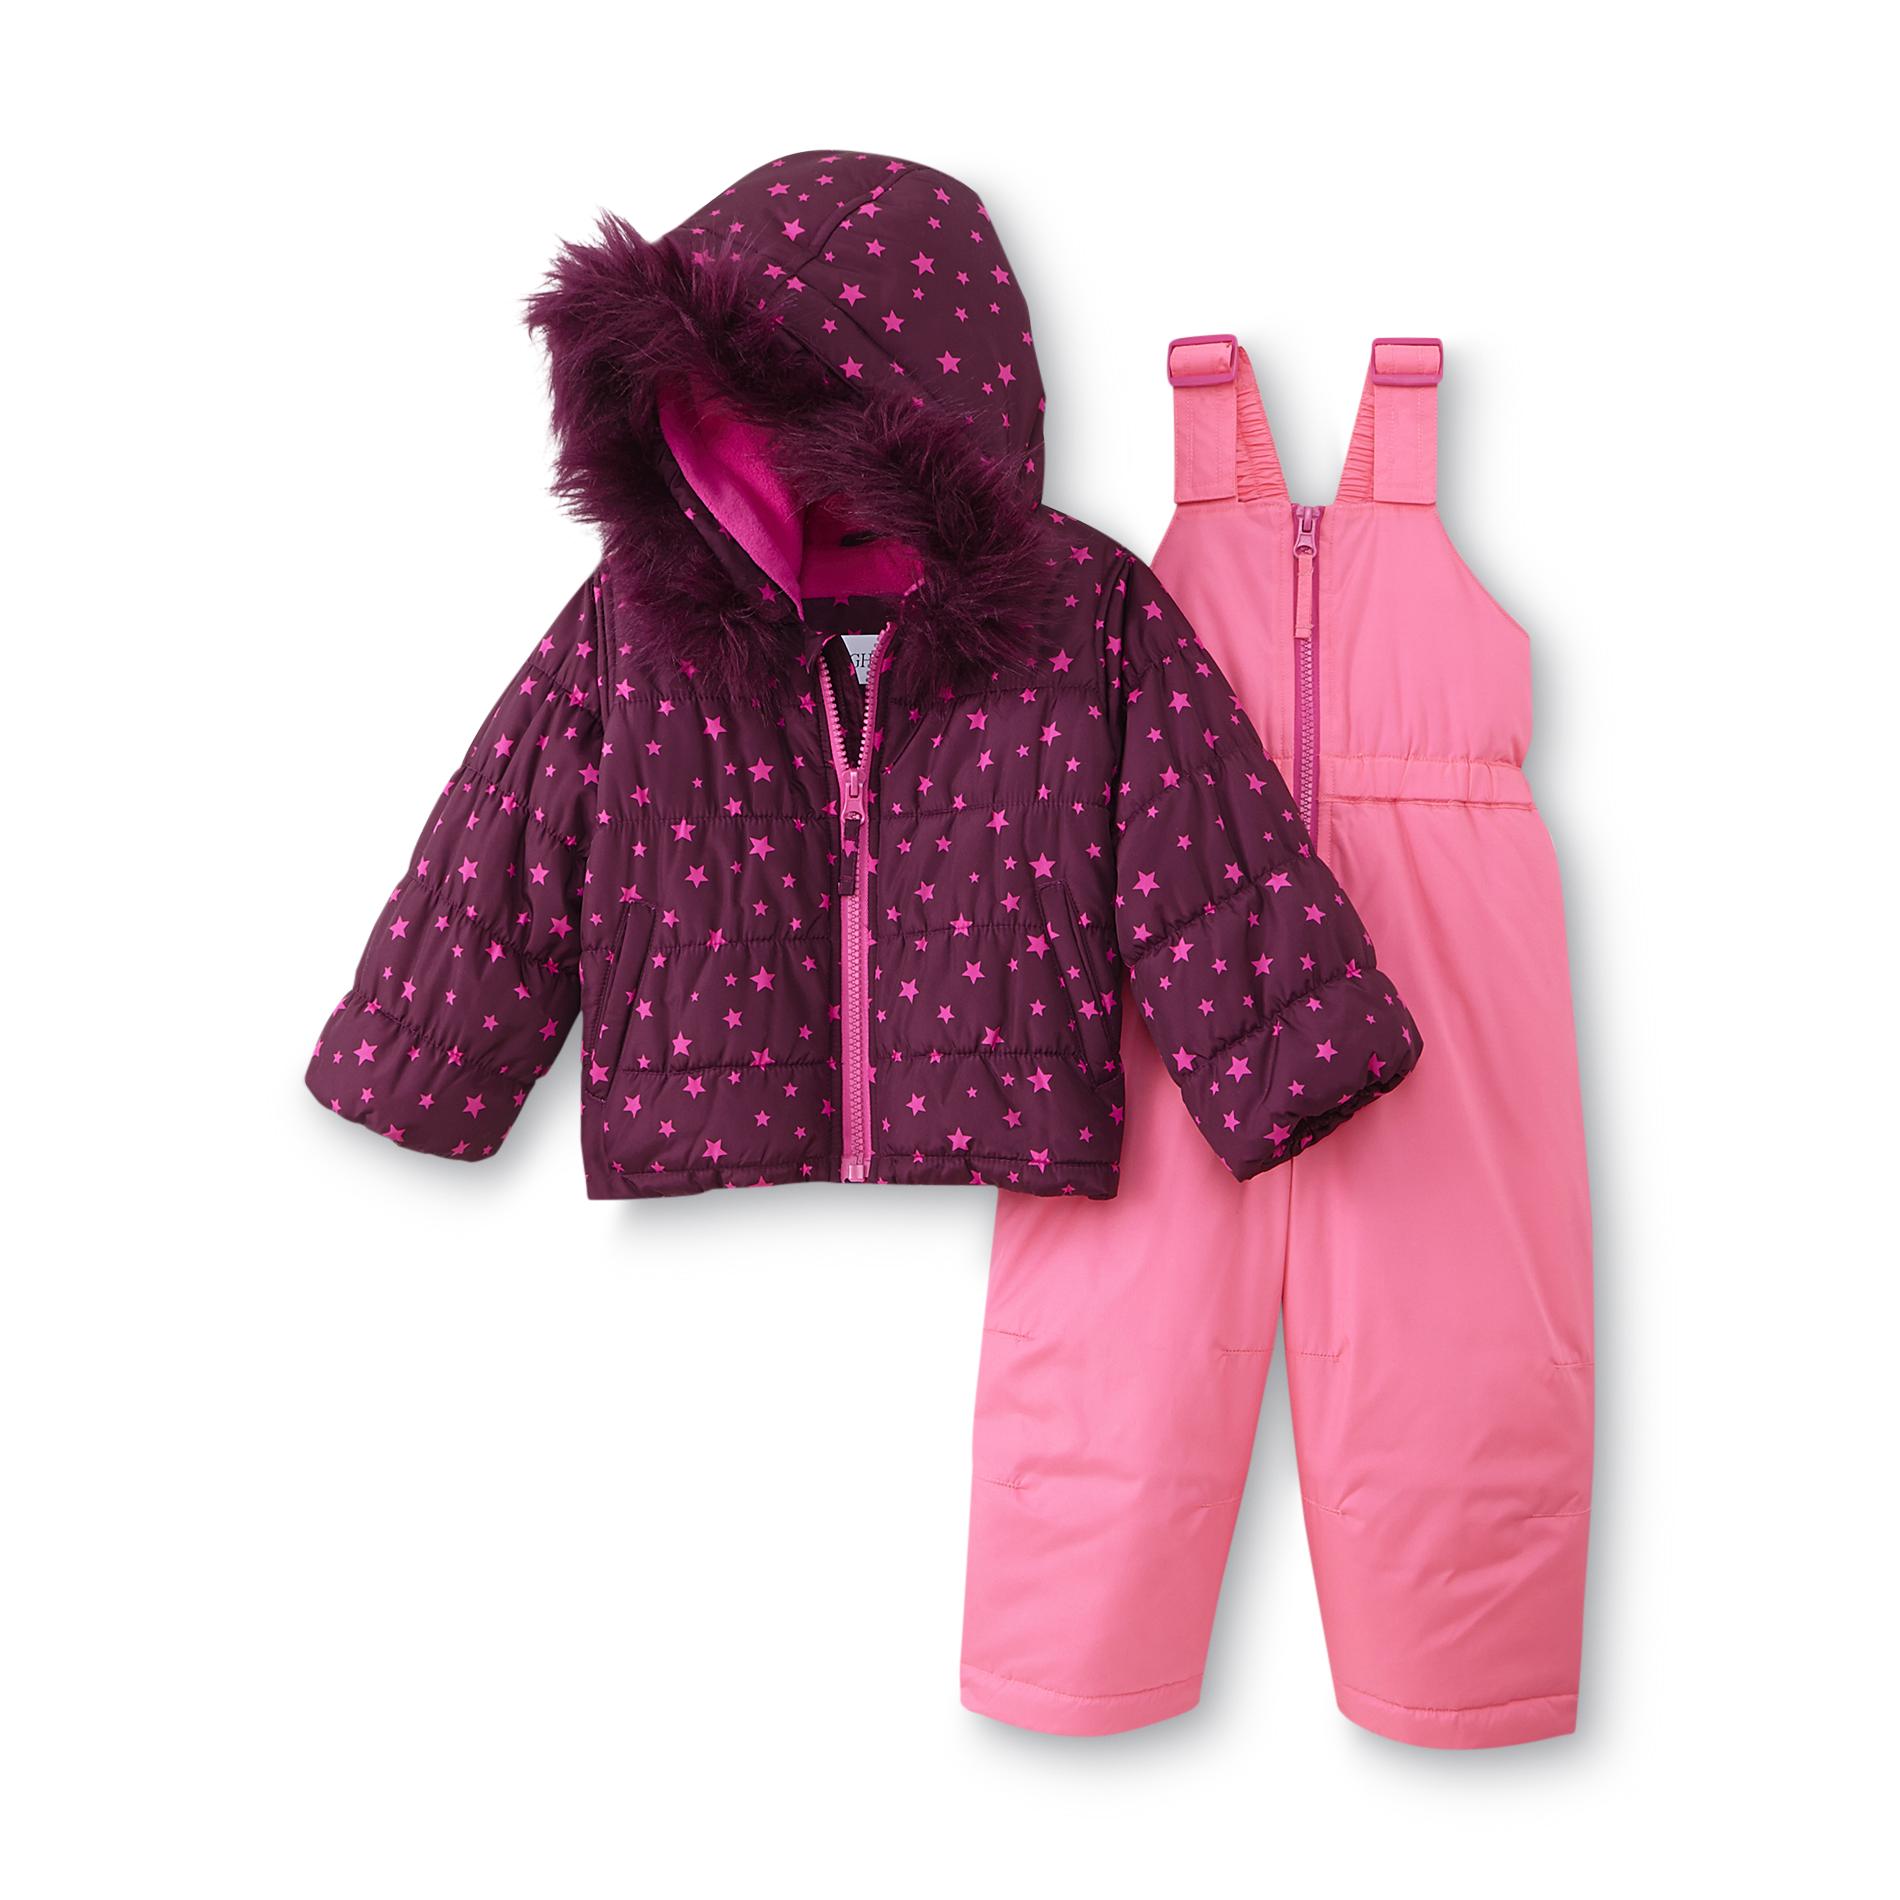 Toughskins Infant Girl's Jacket & Snow Pants - Stars